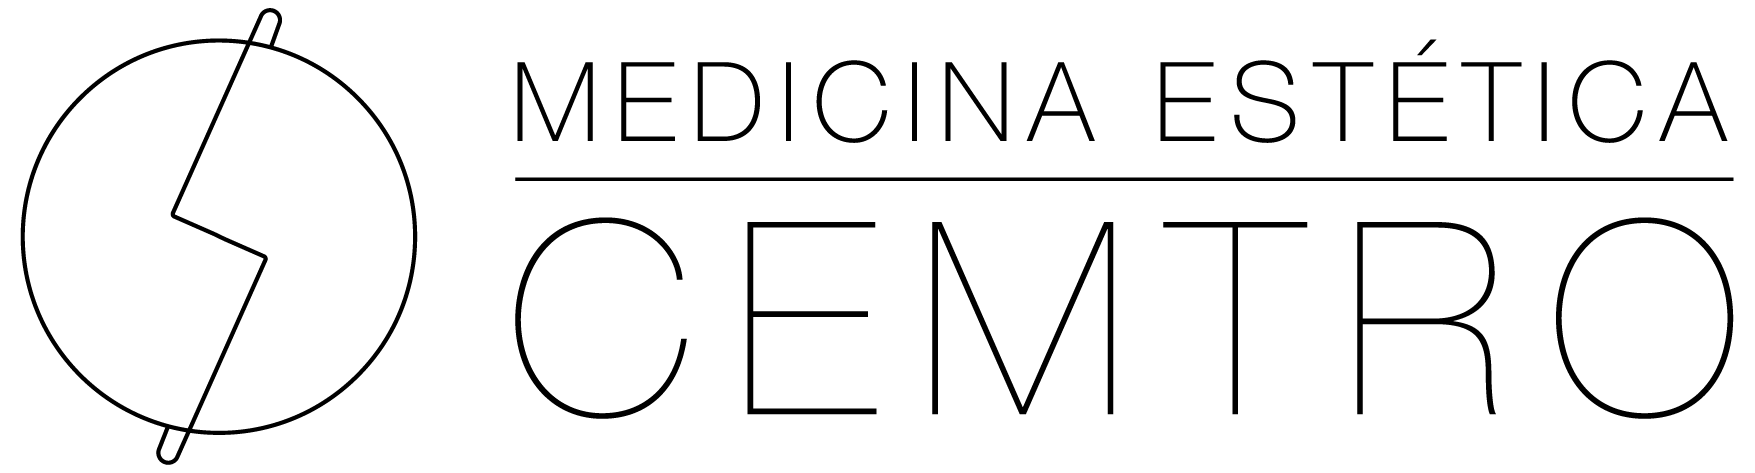 Logotipo medicina estetica clinica cemtro